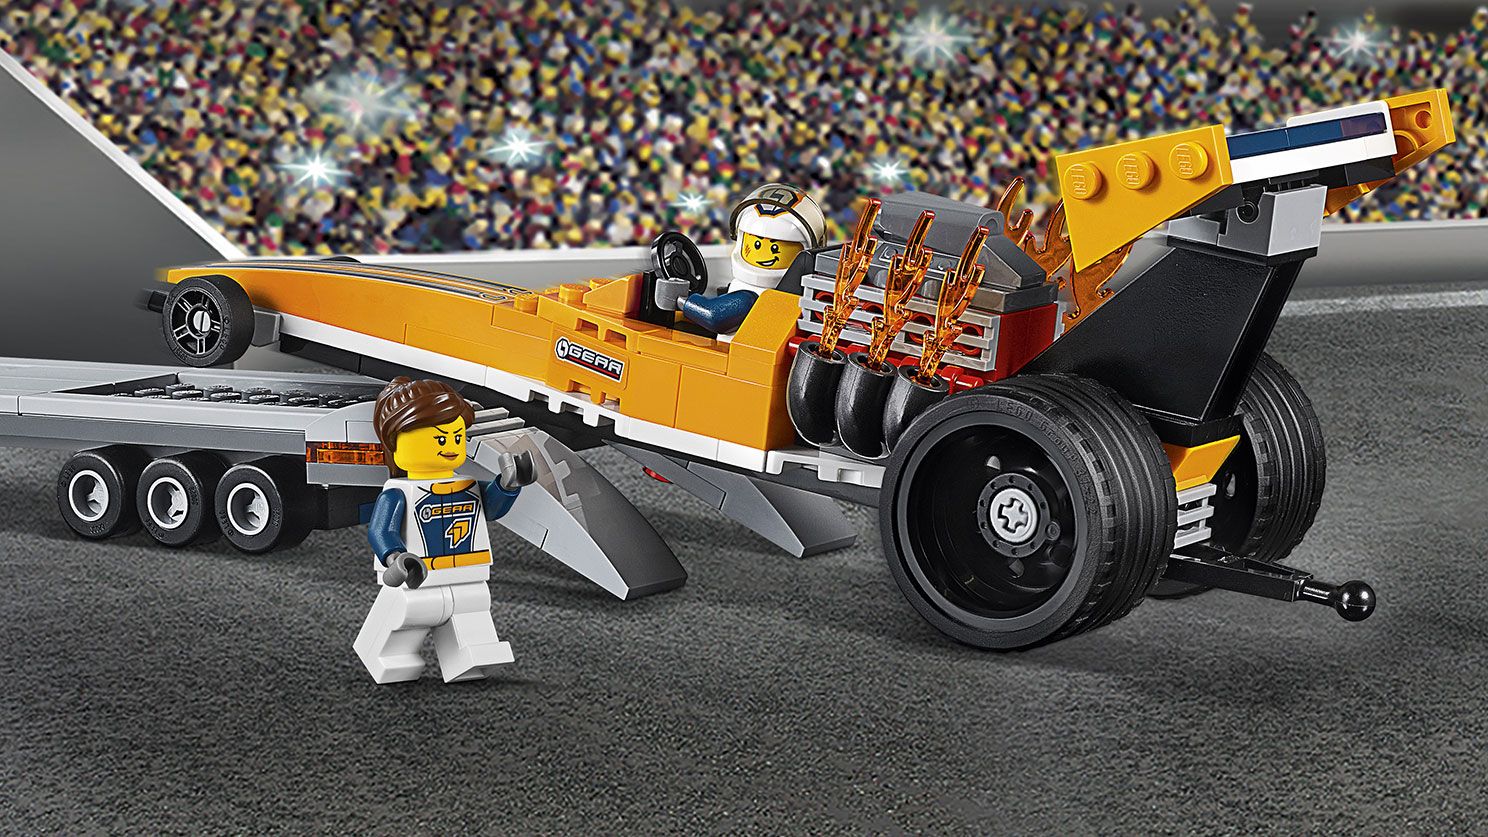 LEGO City 60151 Dragster-Transporter LEGO_60151_WEB_SEC01_1488.jpg